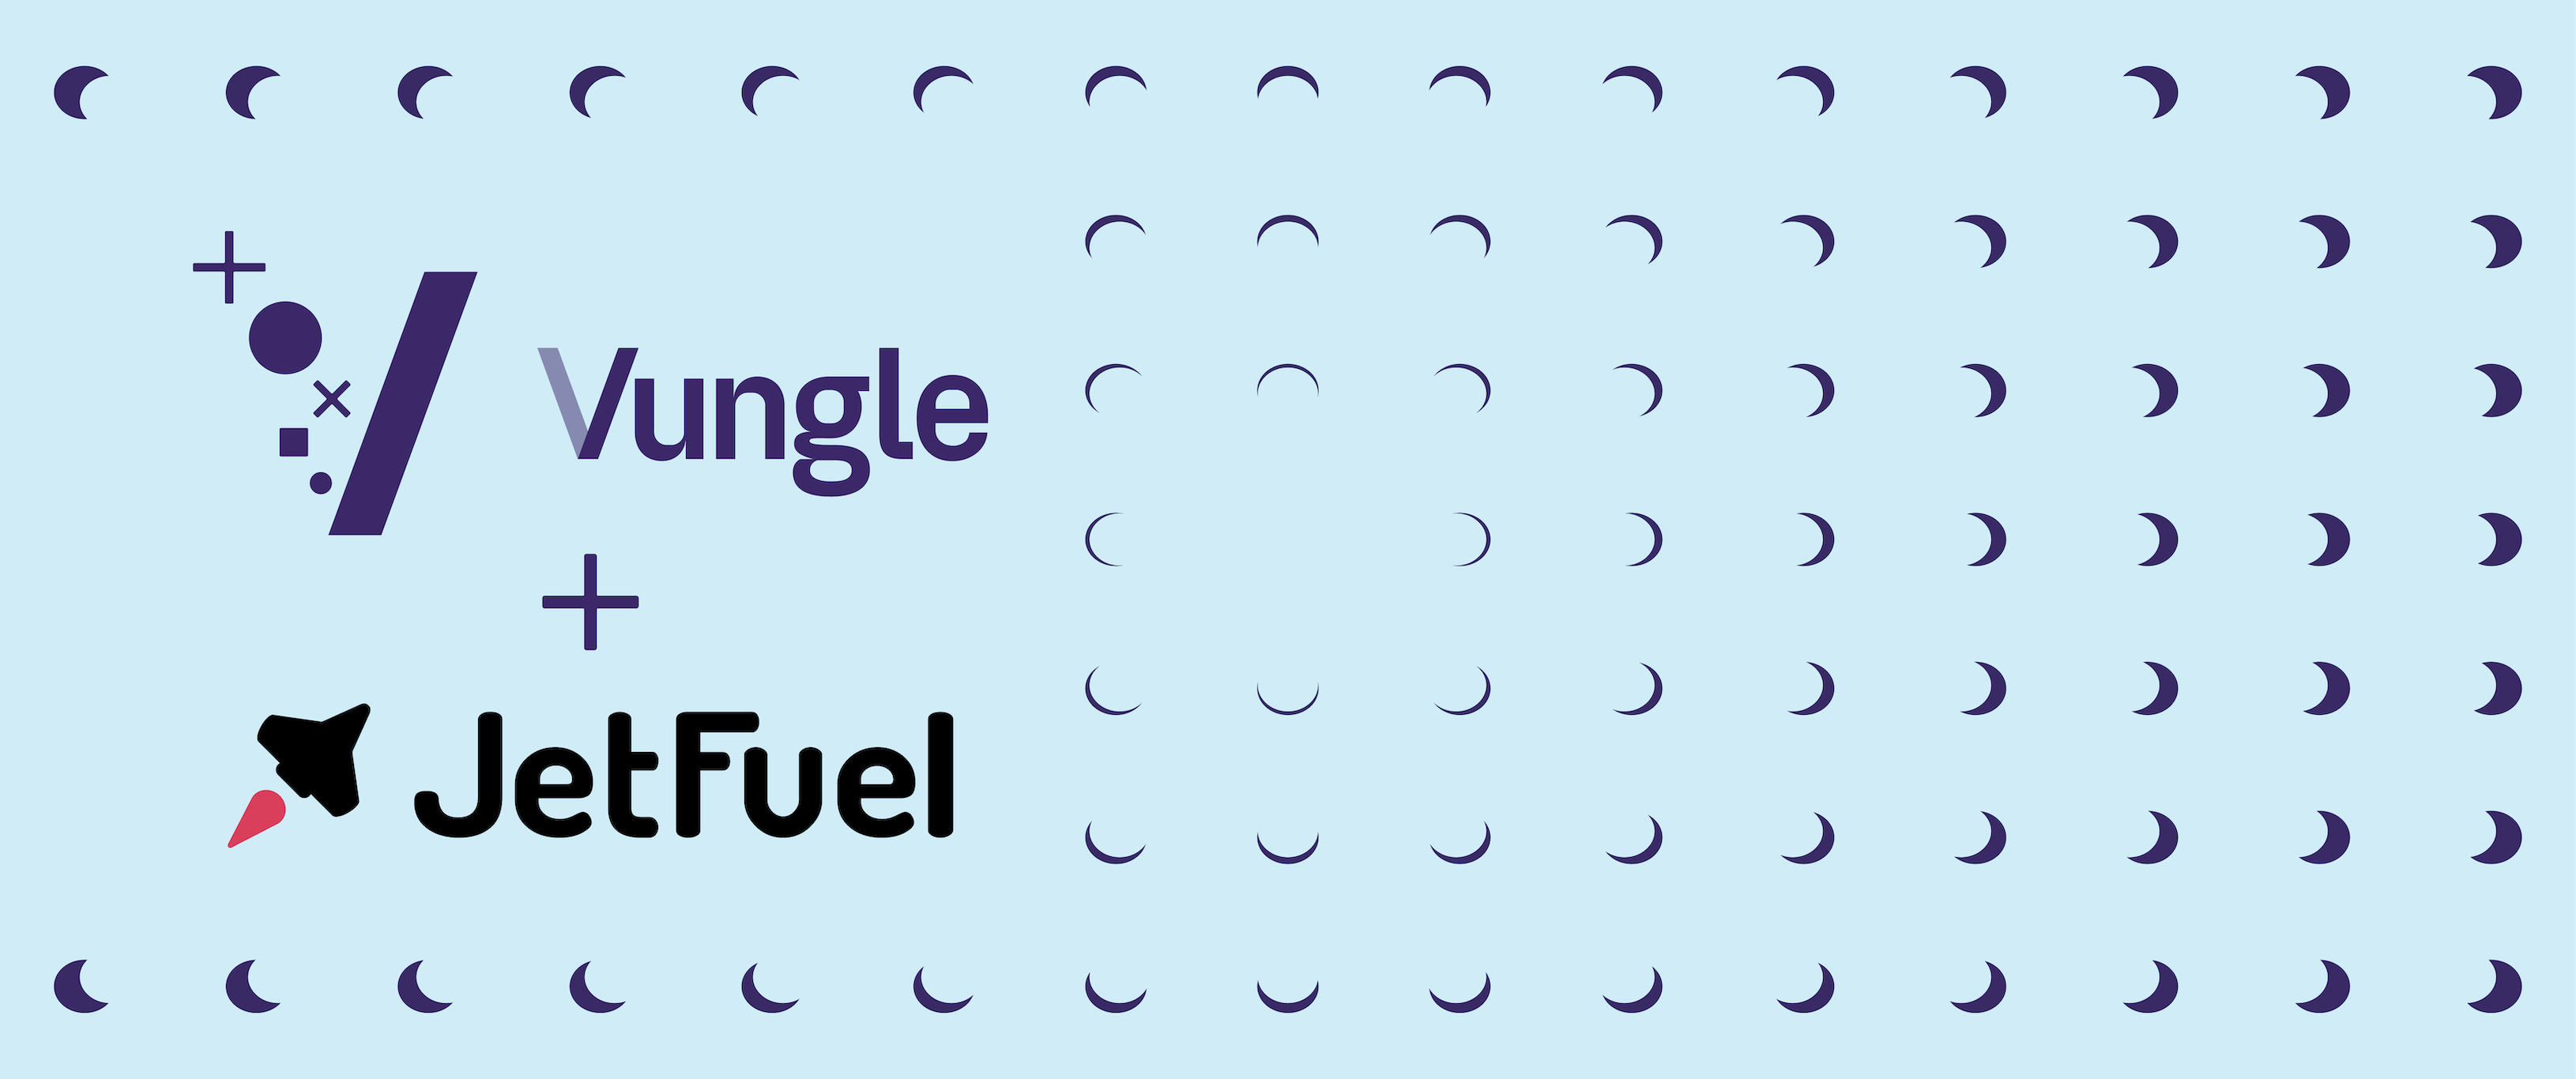 Vungle acquires JetFuel Fresh from Vungle